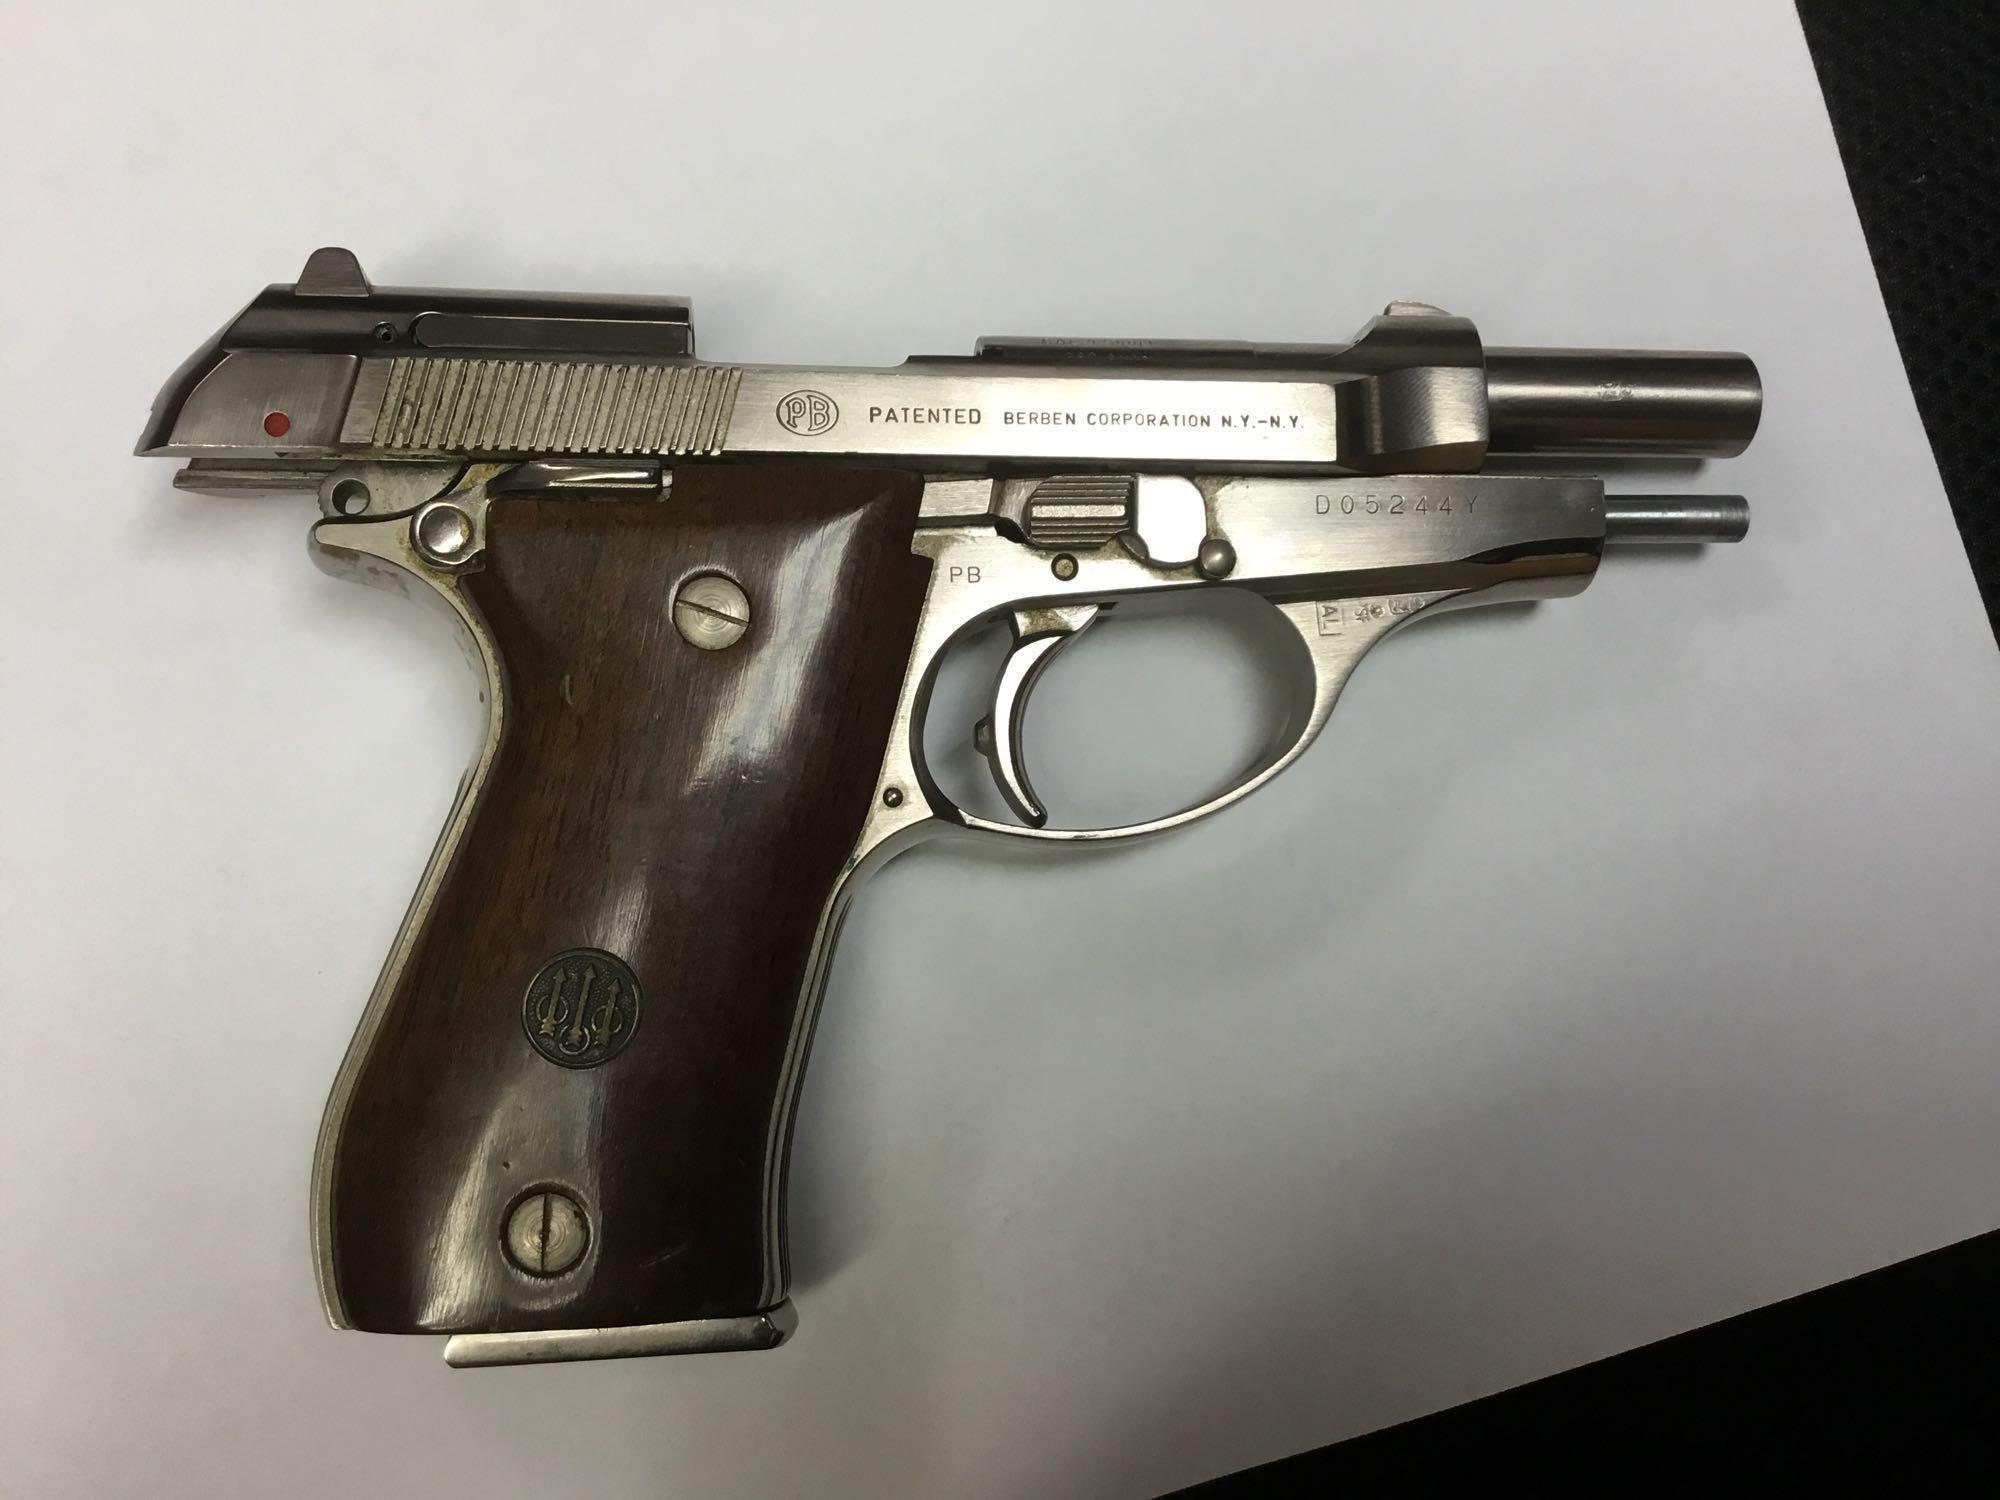 Pietro Beretta 9mm pistol with clip